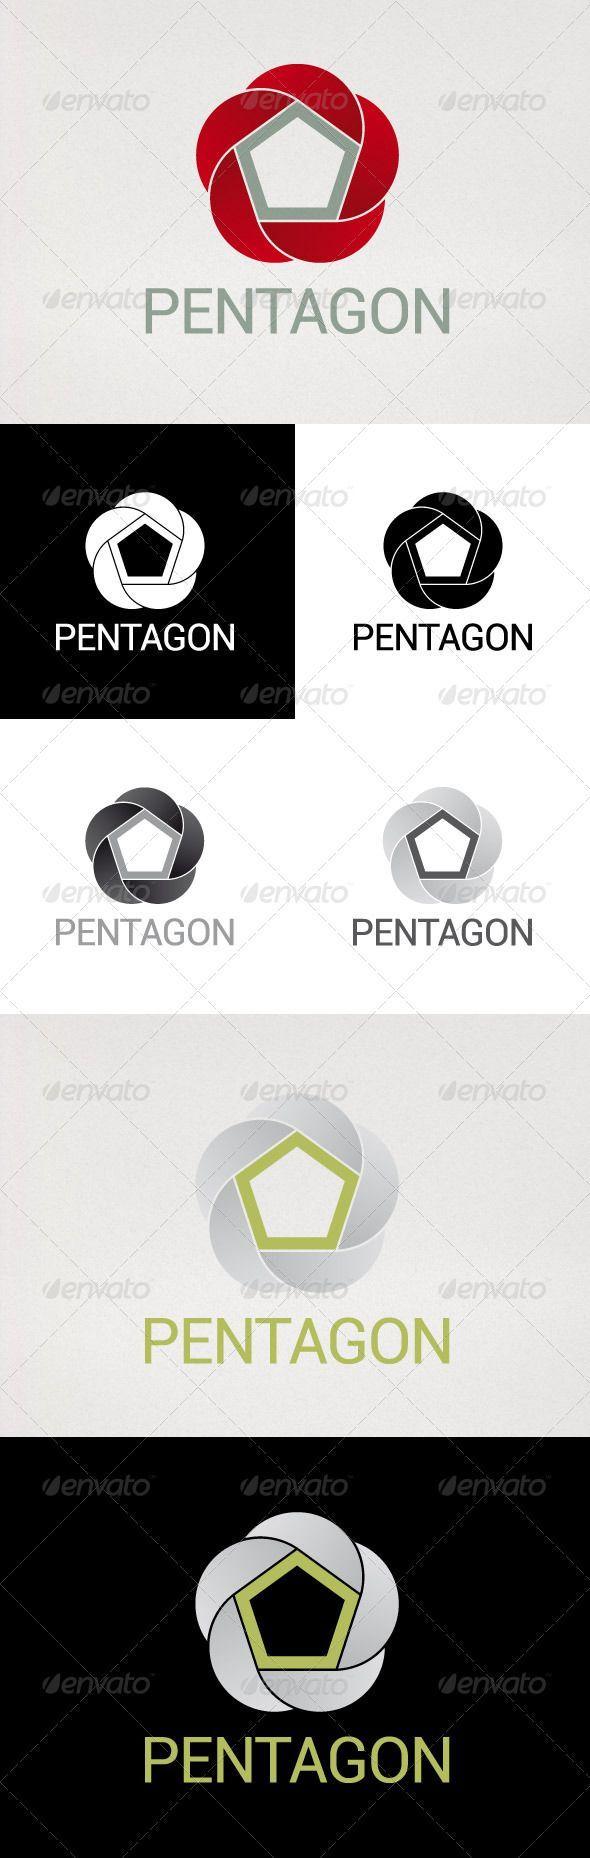 Red and Green Pentagon Logo - aperture flower logo - Google Search | LOGO | Pinterest | Logos ...